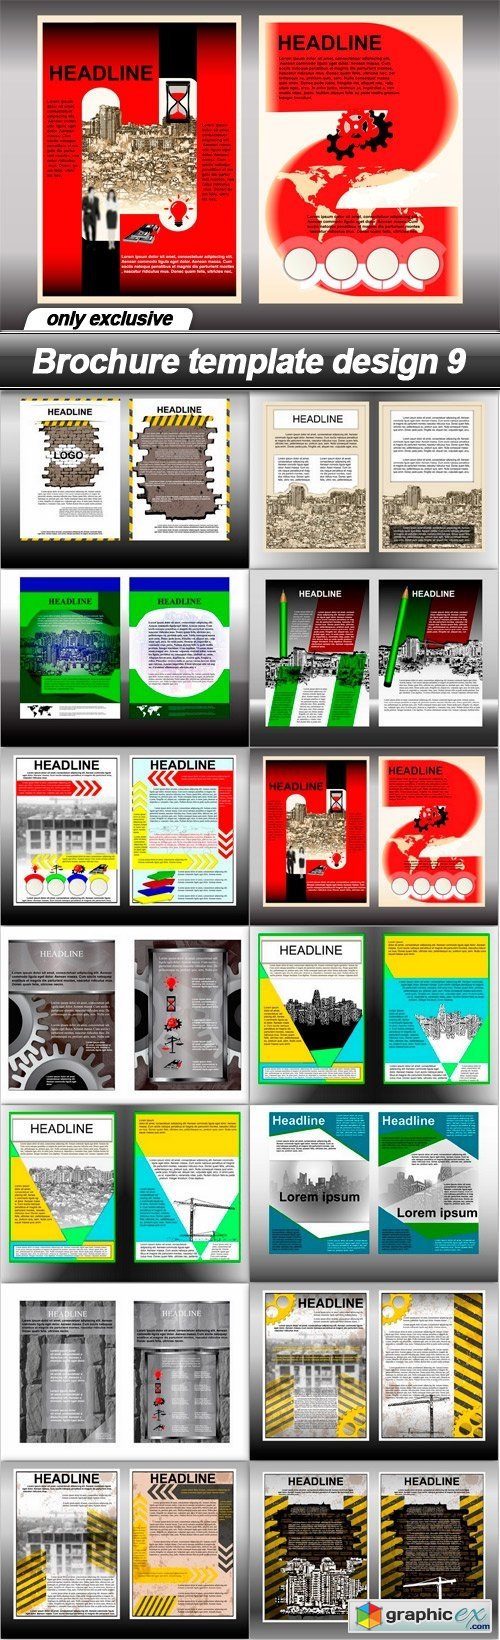 Brochure template design 10 - 14 EPS